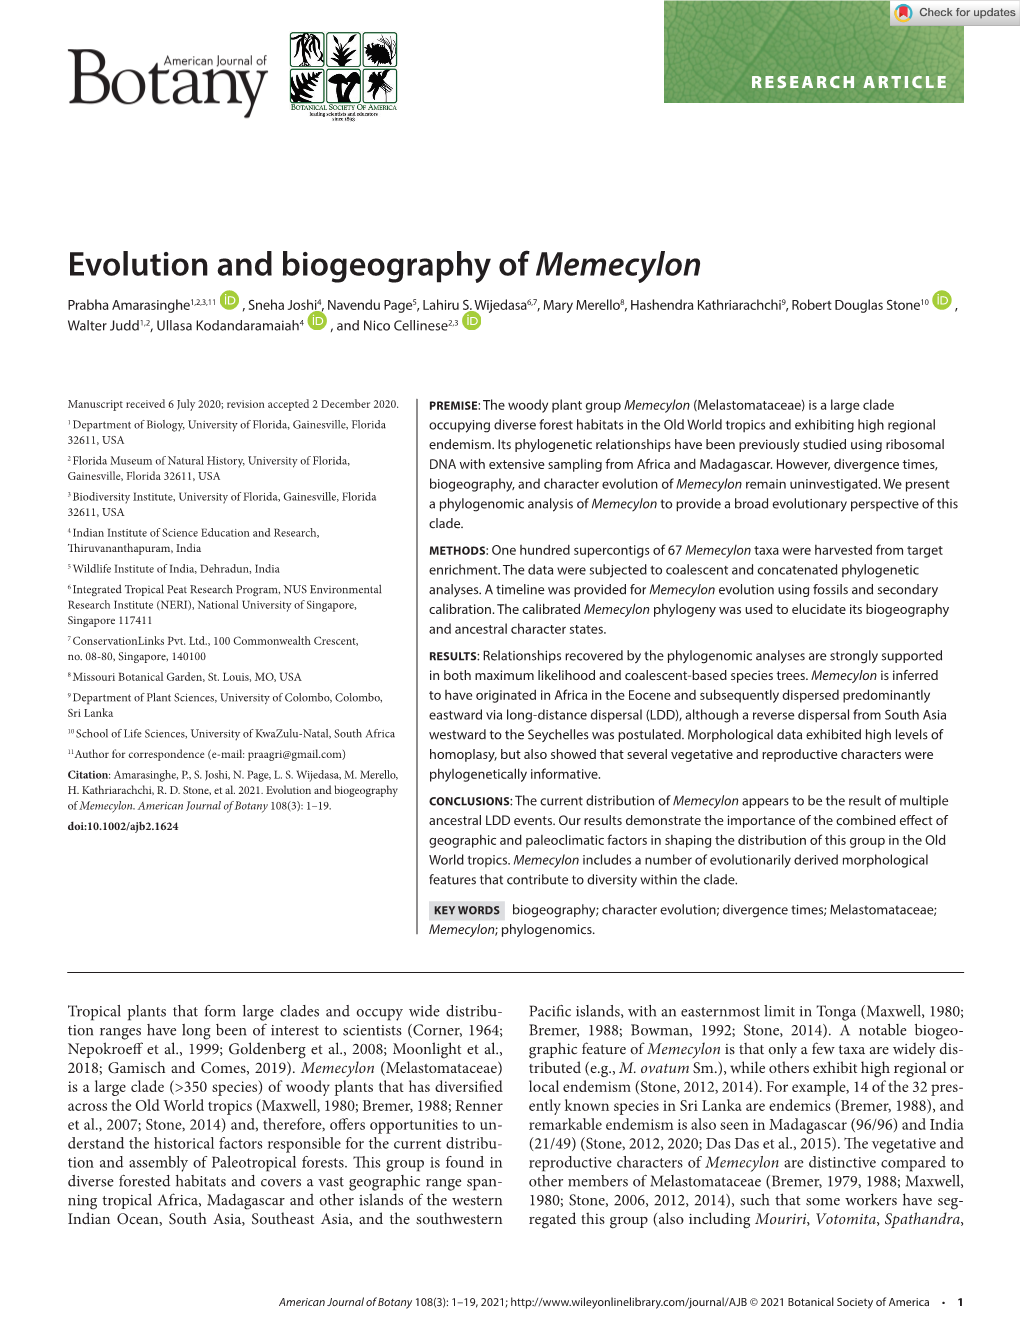 Evolution and Biogeography of Memecylon